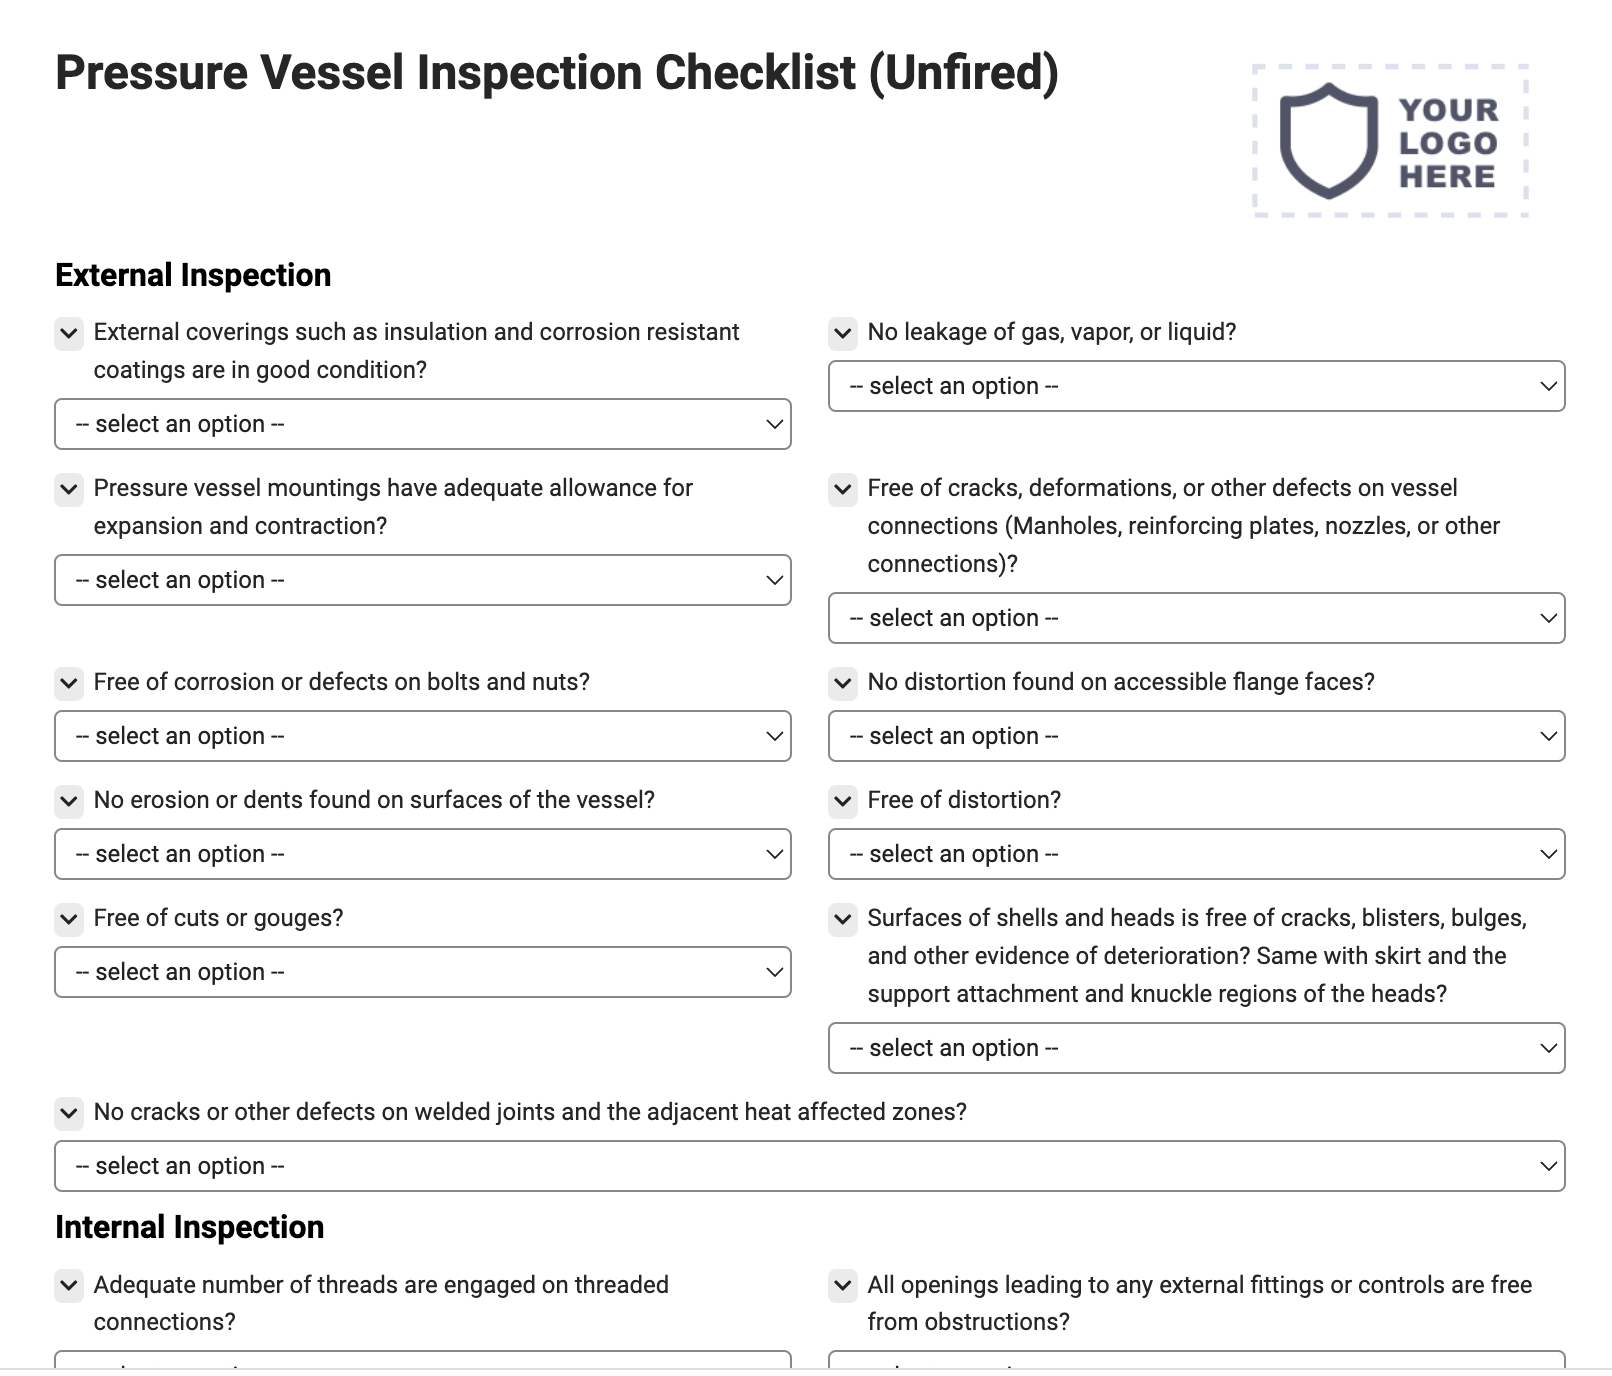 Pressure Vessel Inspection Checklist (unfired)